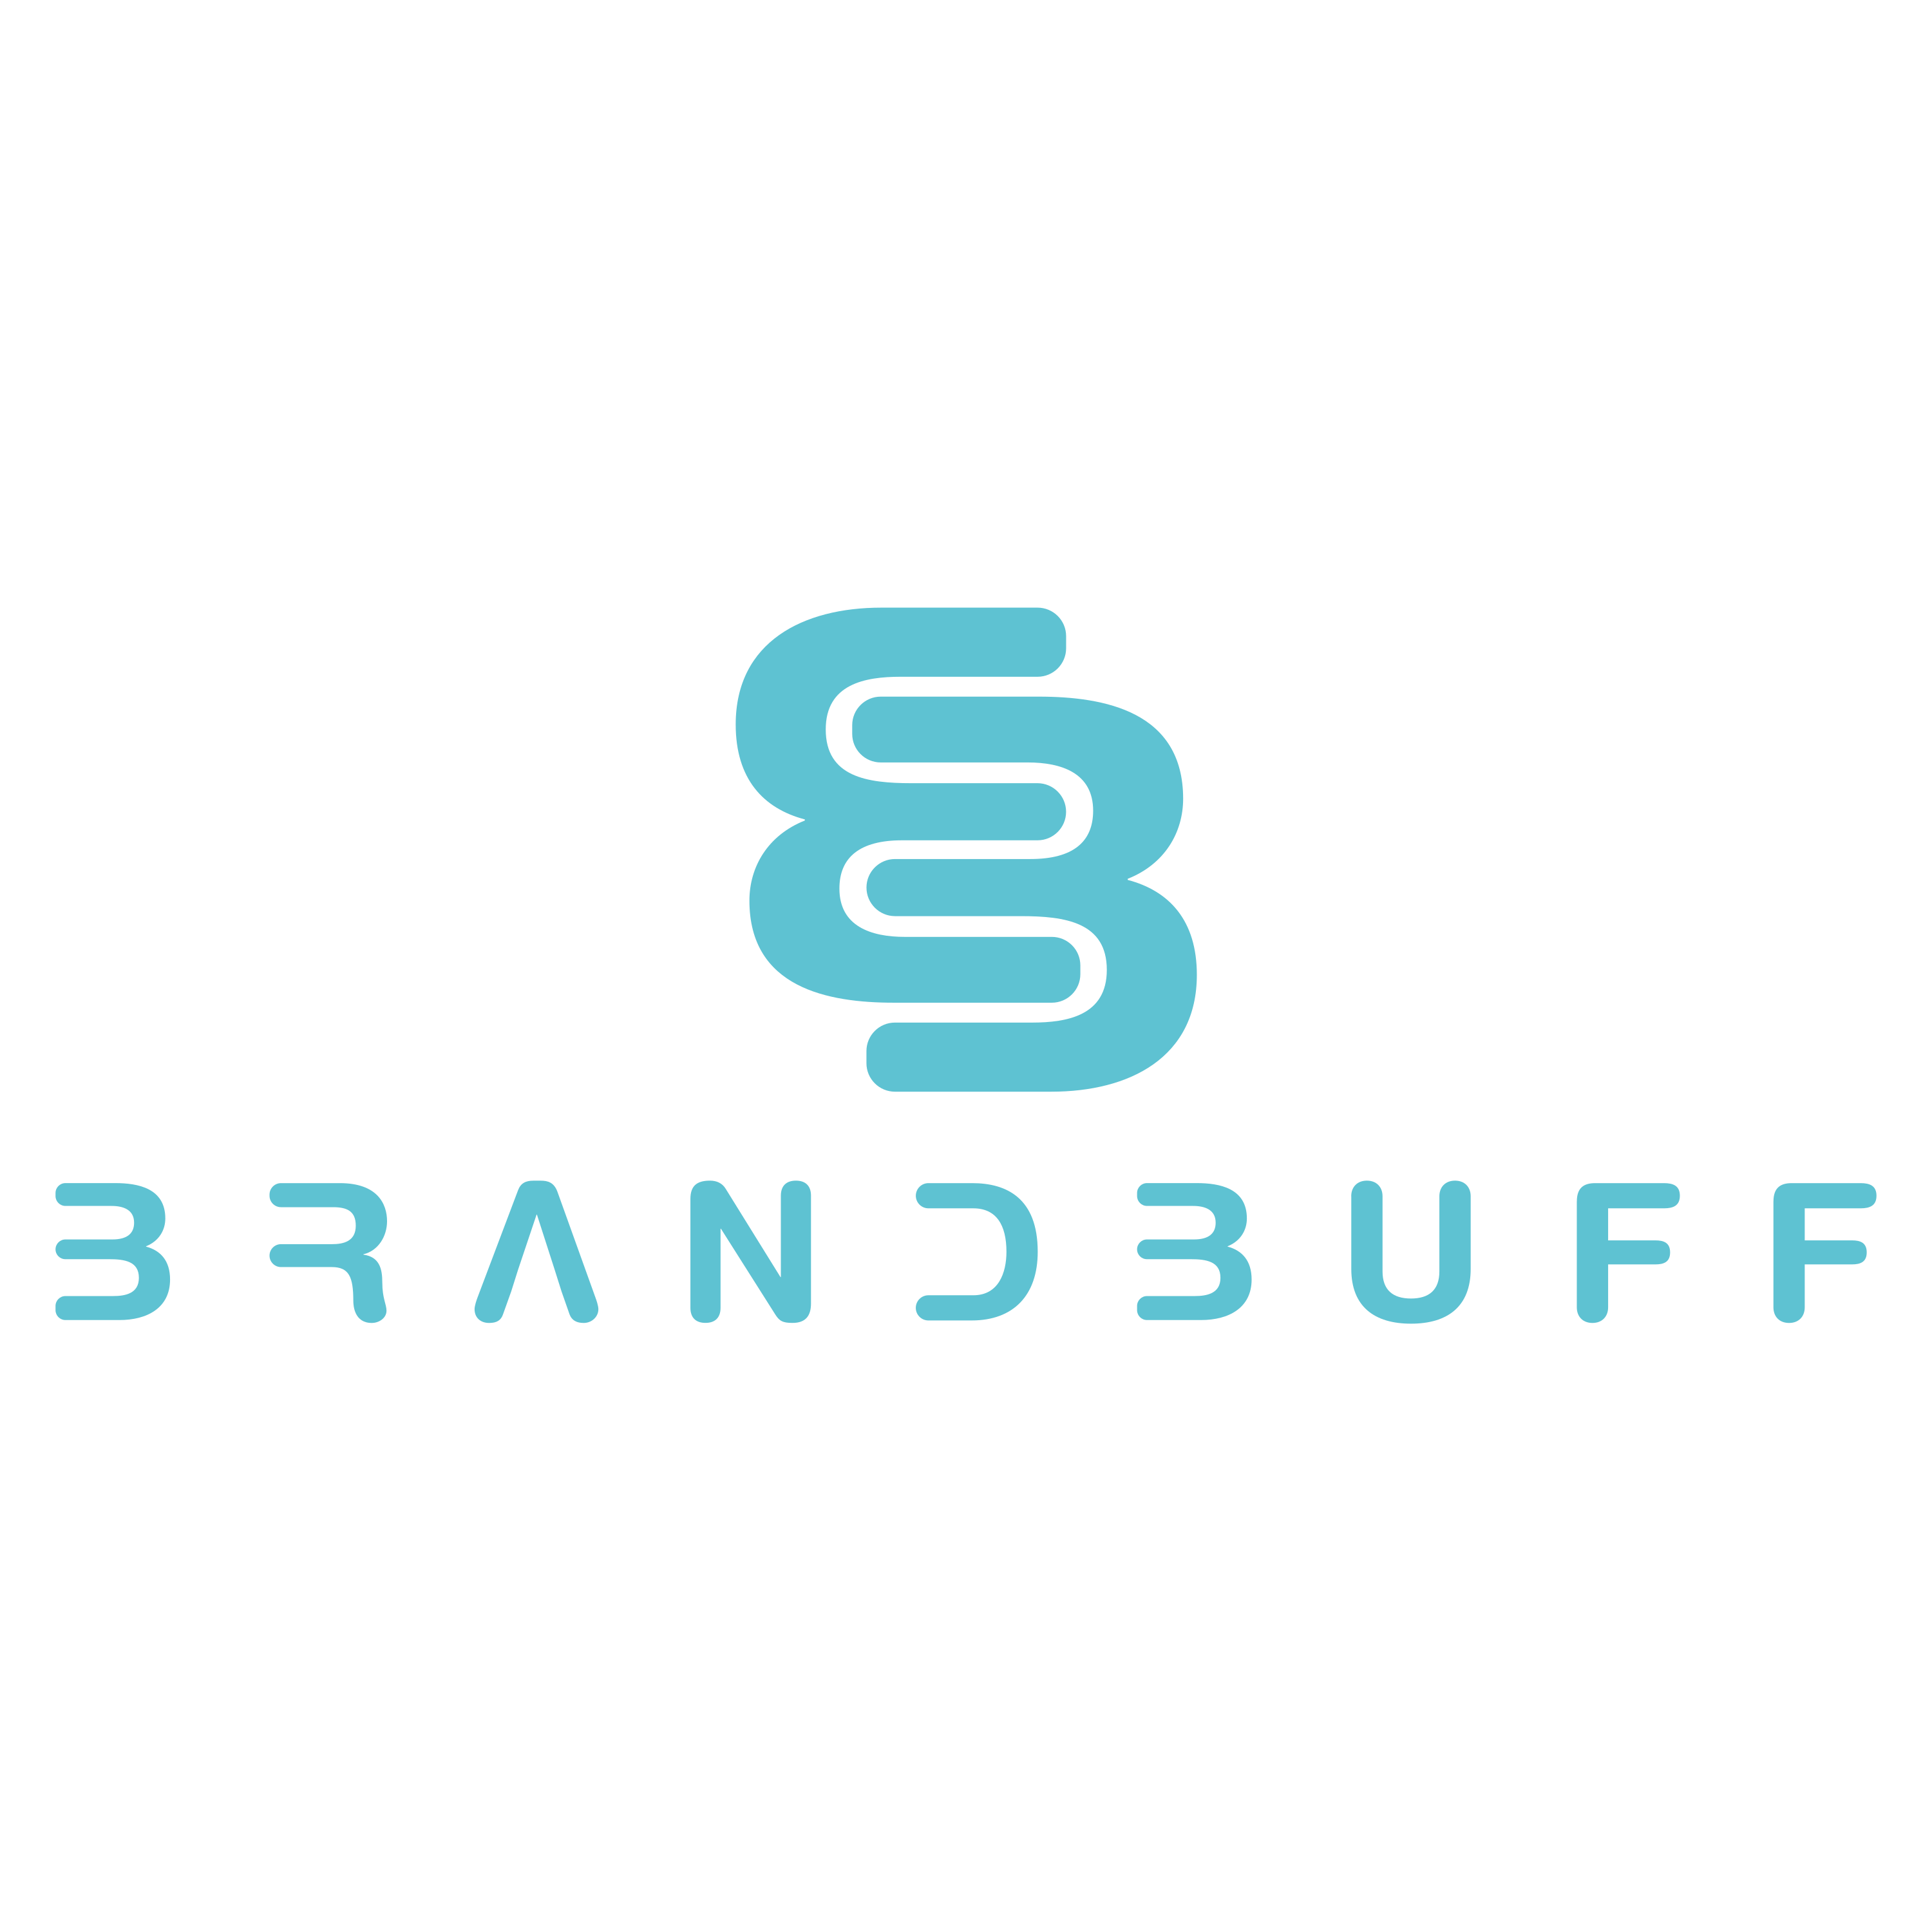 BrandBuff Logo Transparent Image